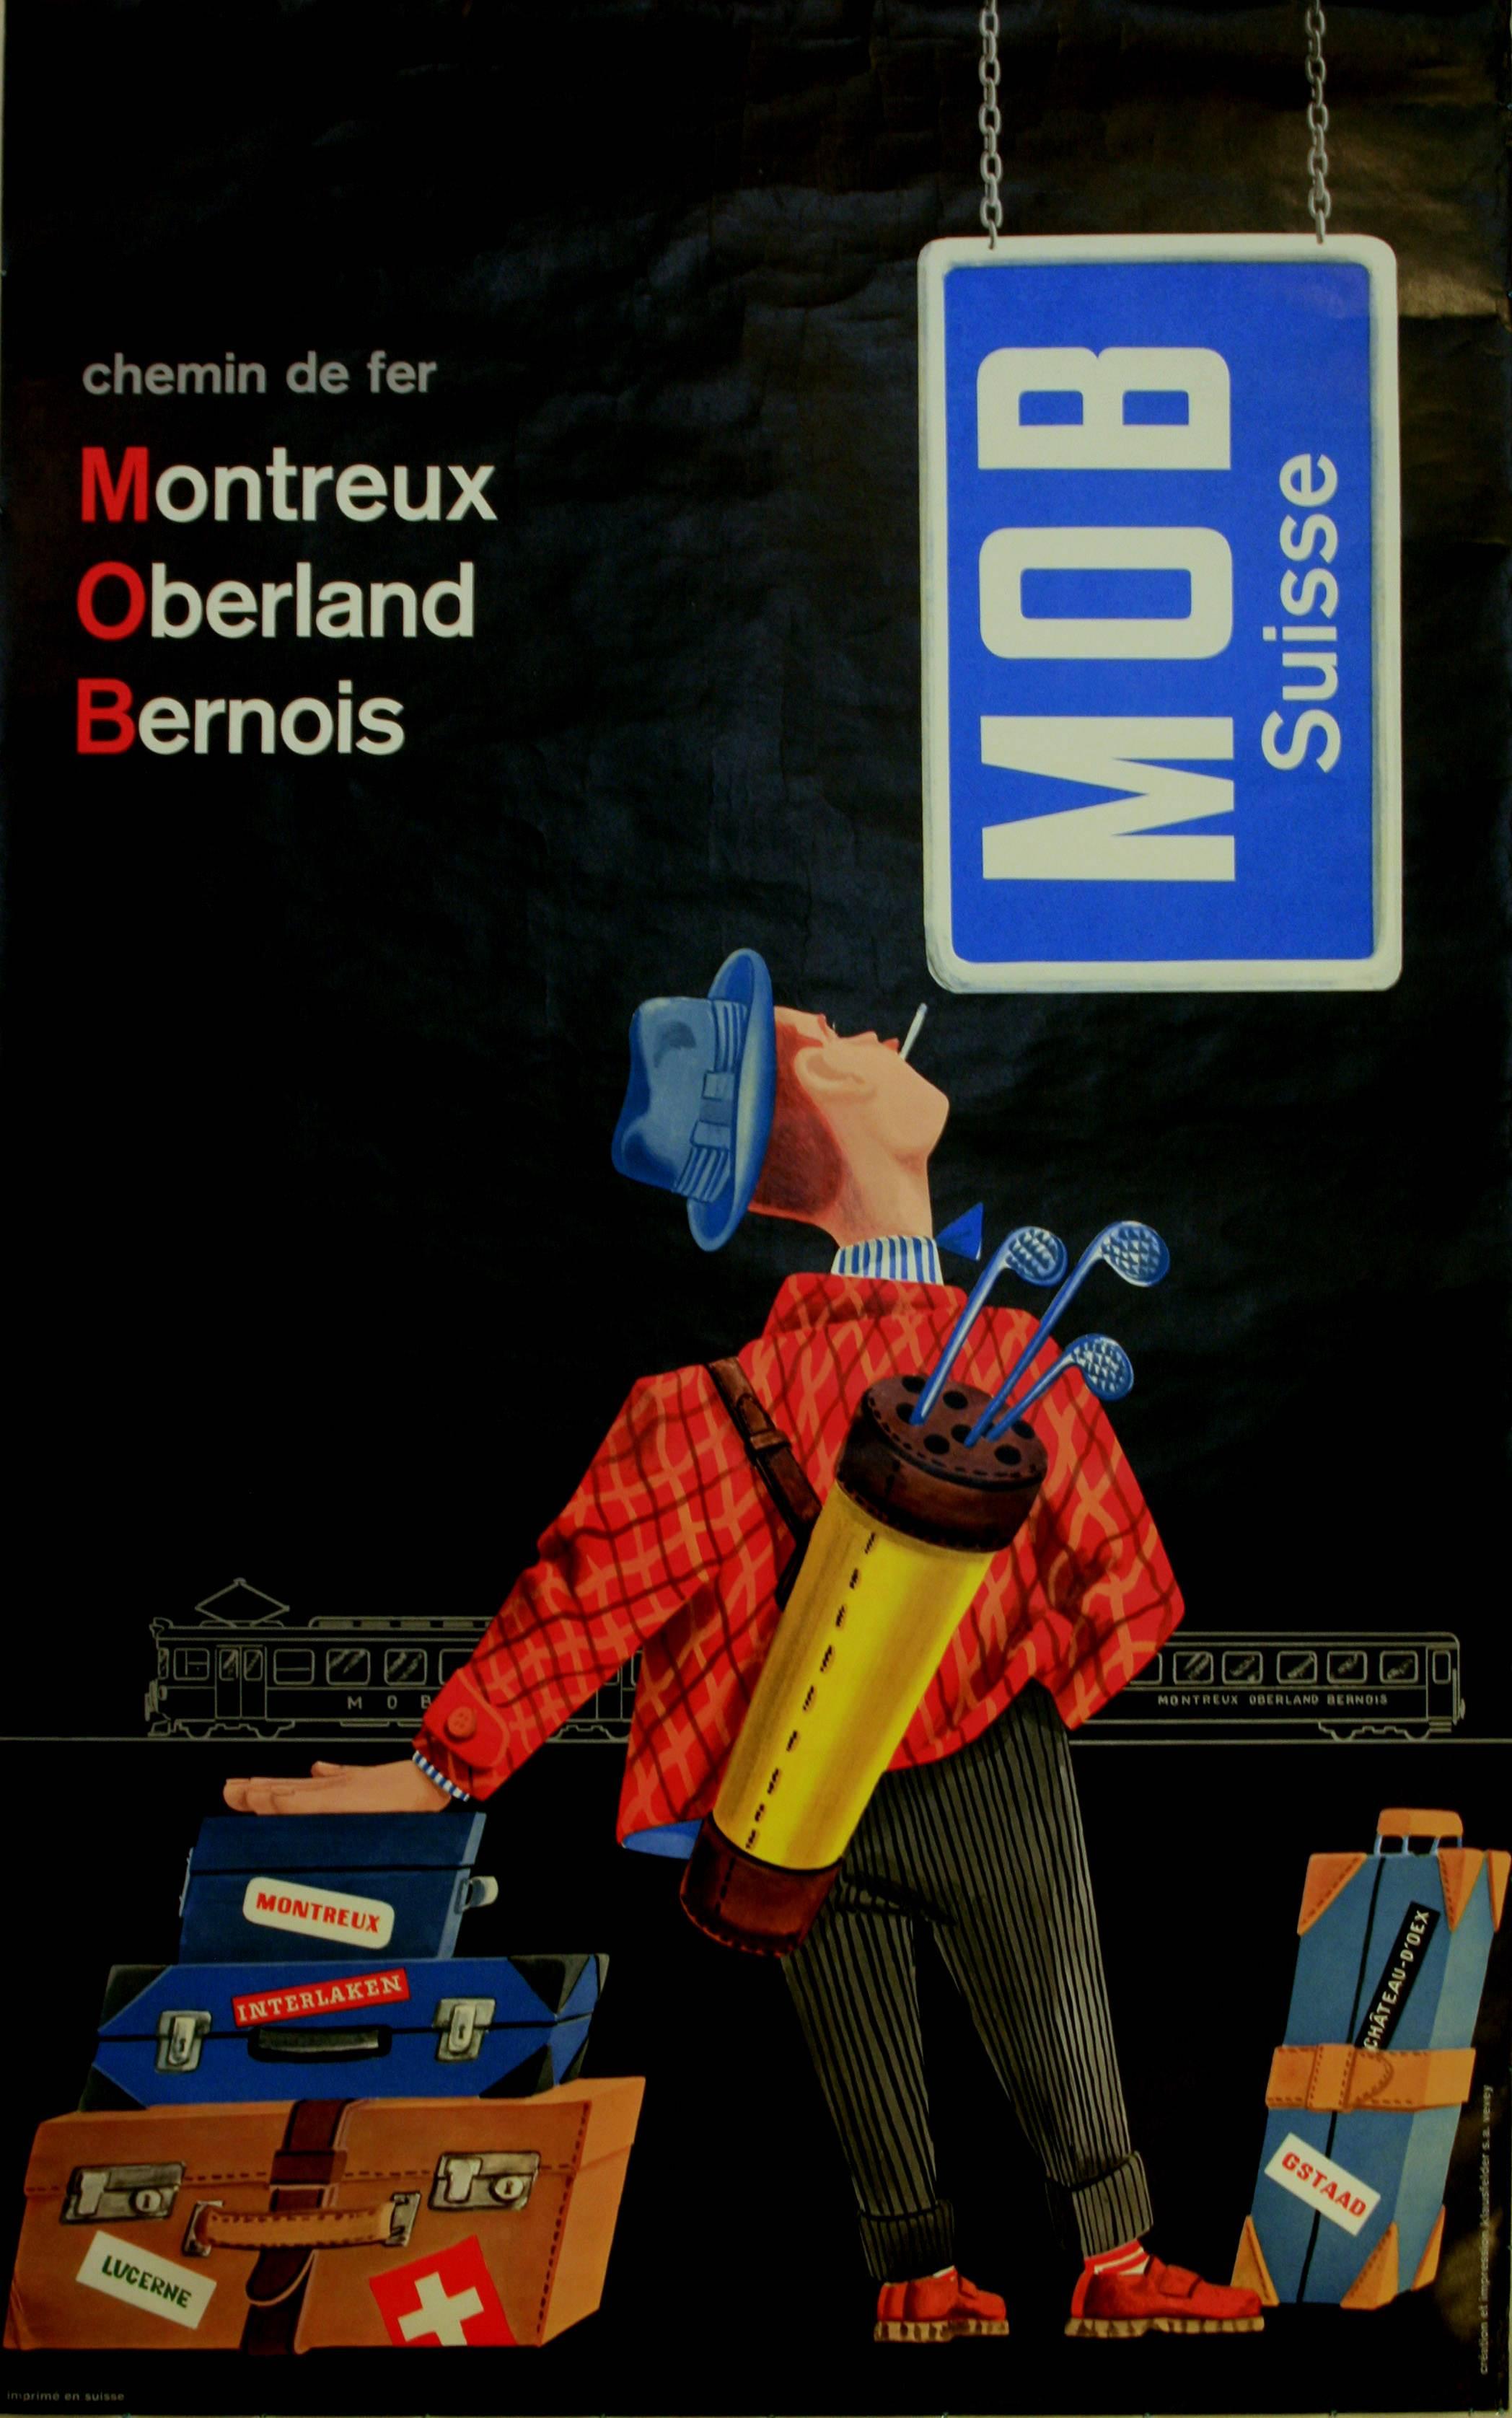 Klaus Felder Print - Original Vintage Montreux Oberland Bernois MOB Railway Poster Featuring A Golfer